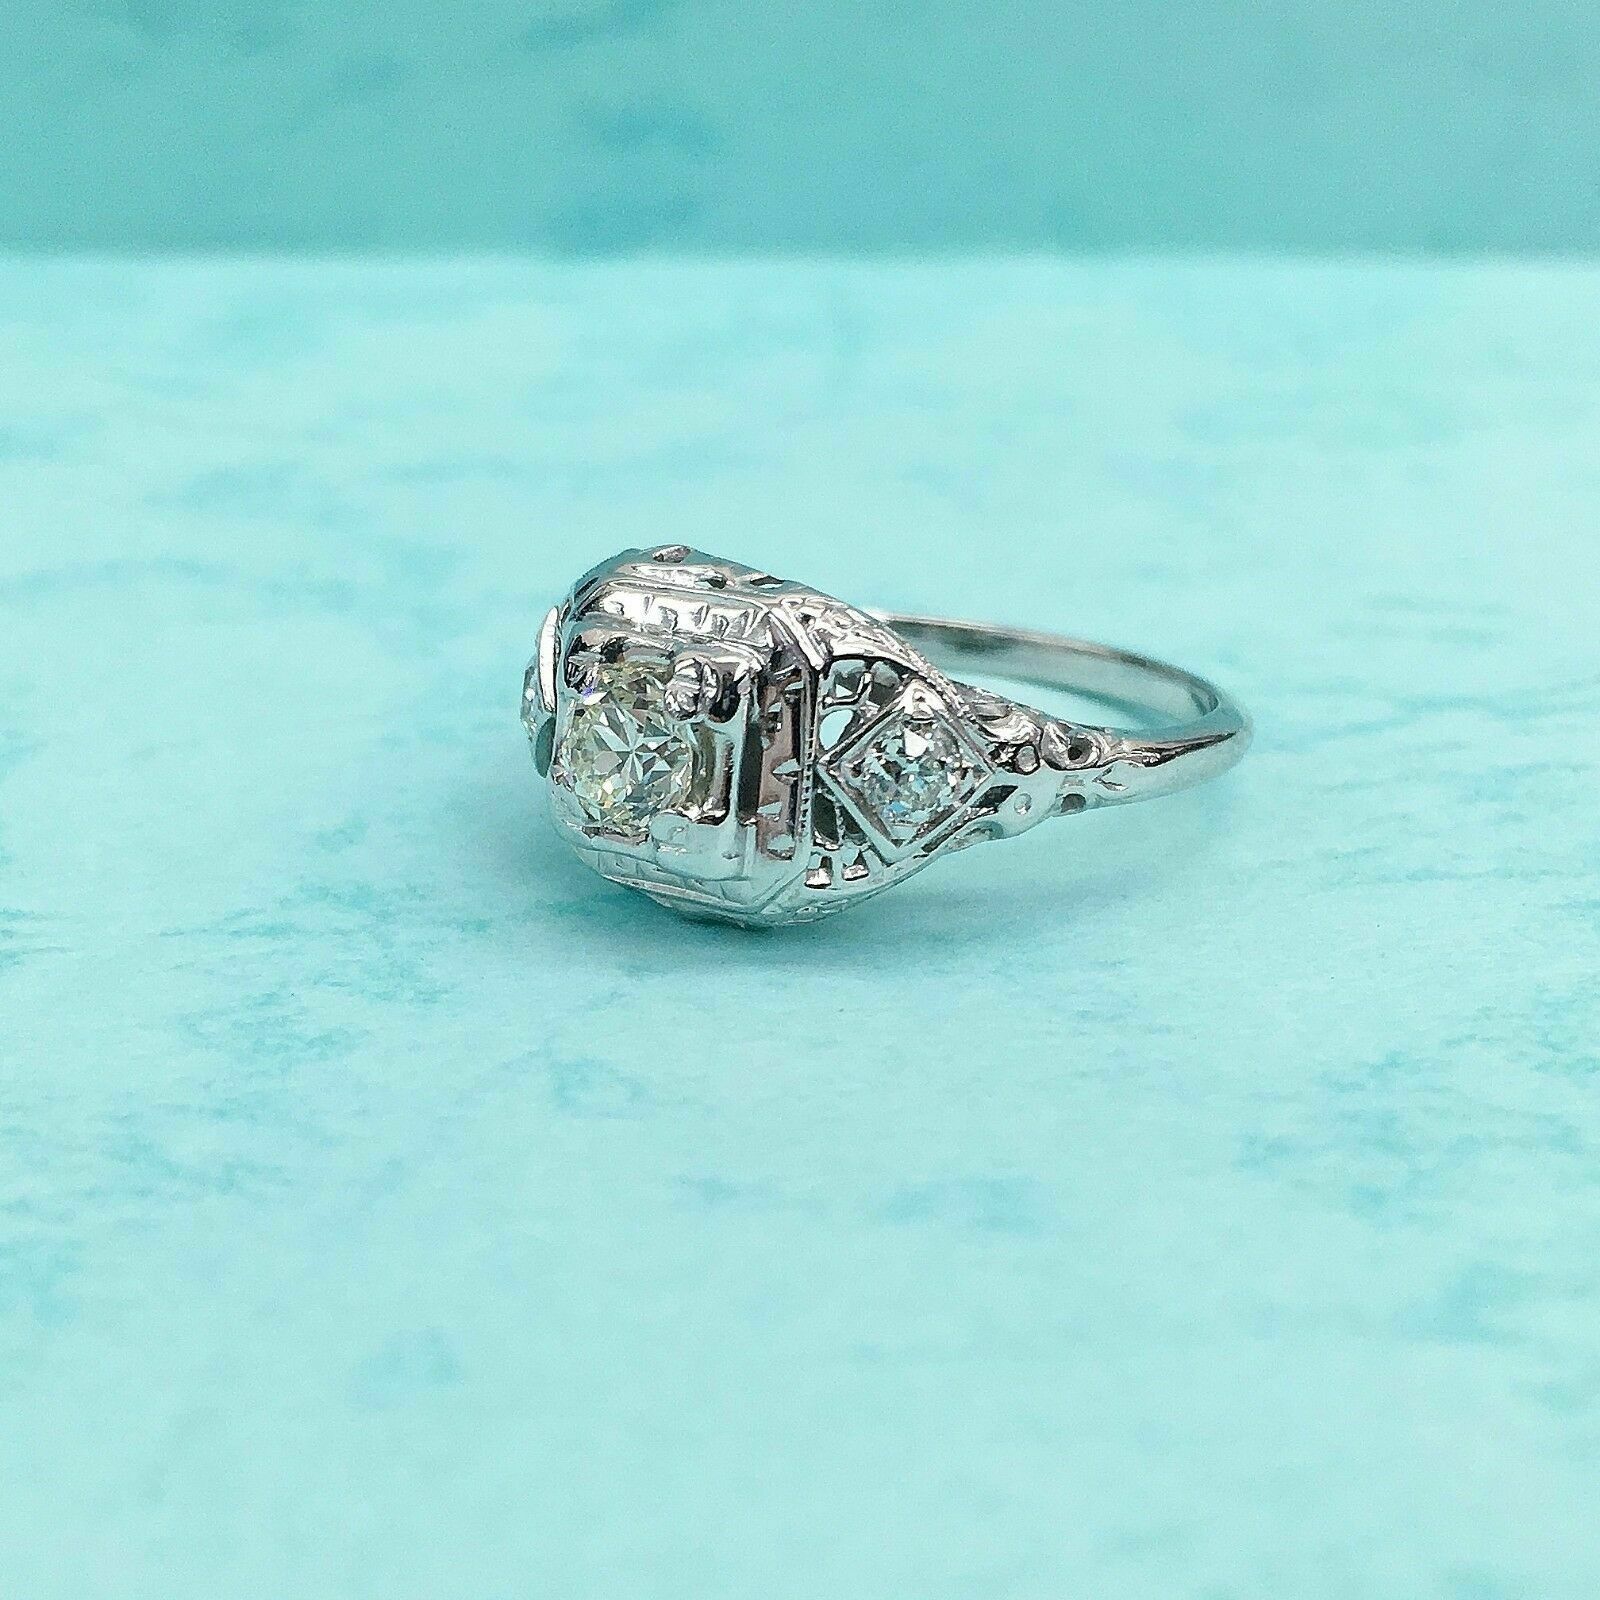 Antique Diamond Wedding Engagement Ring Circa 1950's 0.50 Carat t.w. VS Diamonds